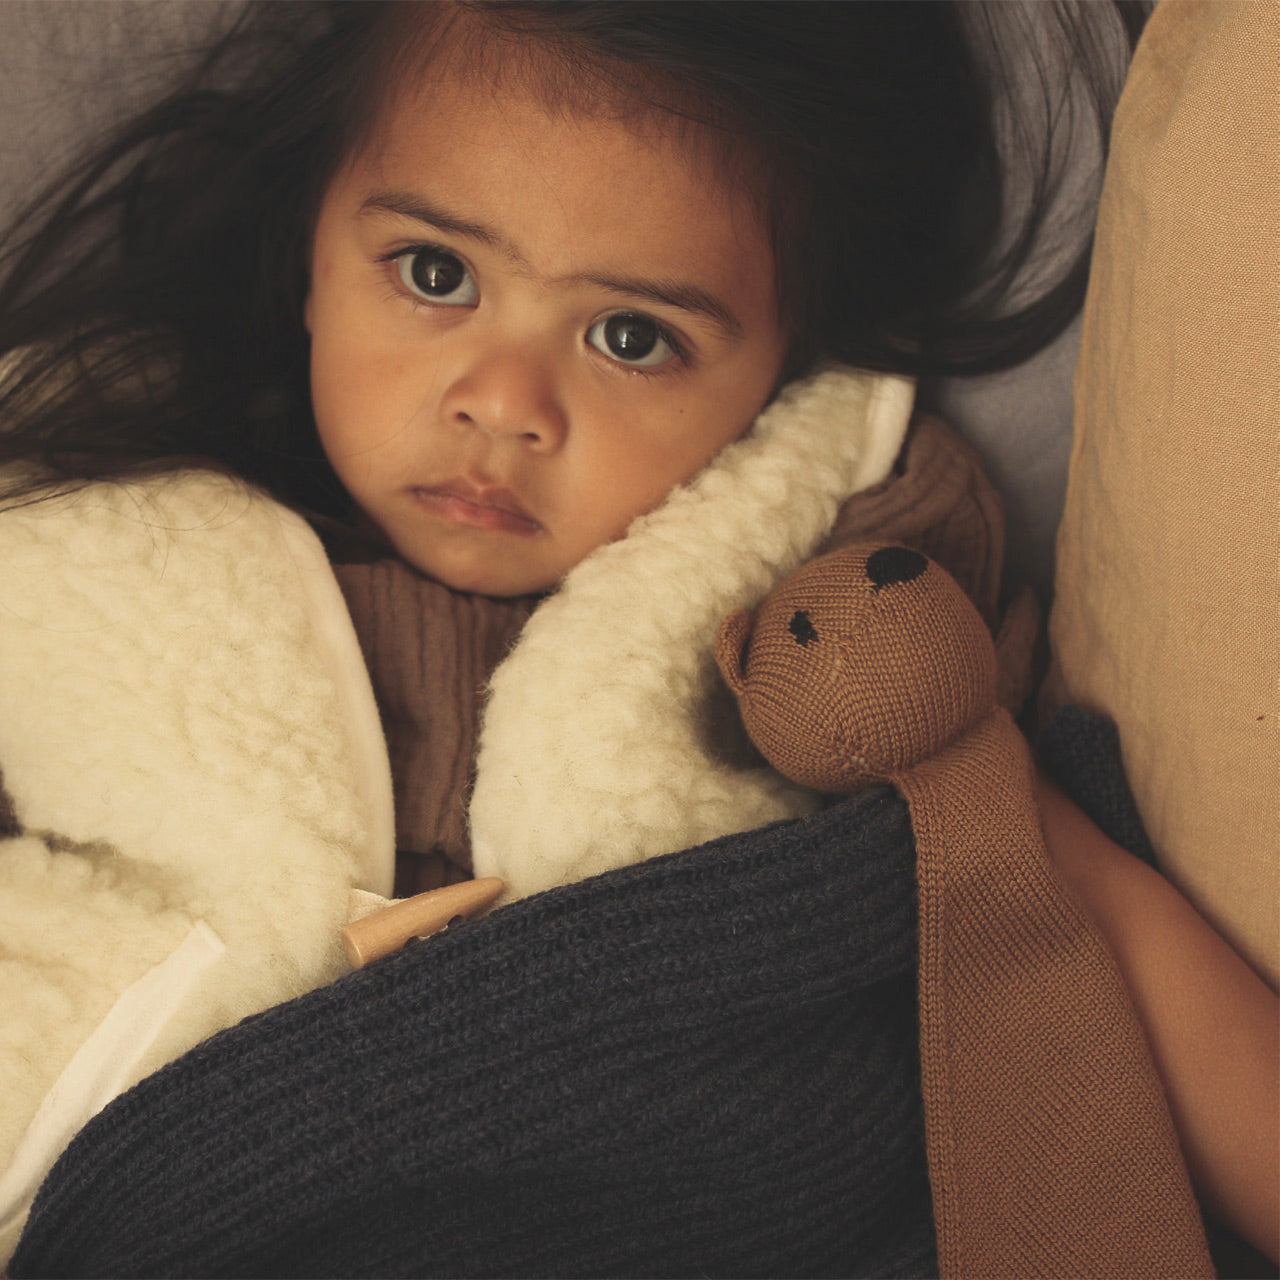 Teddy Tokki Baby Comforter - 100% Merino Wool